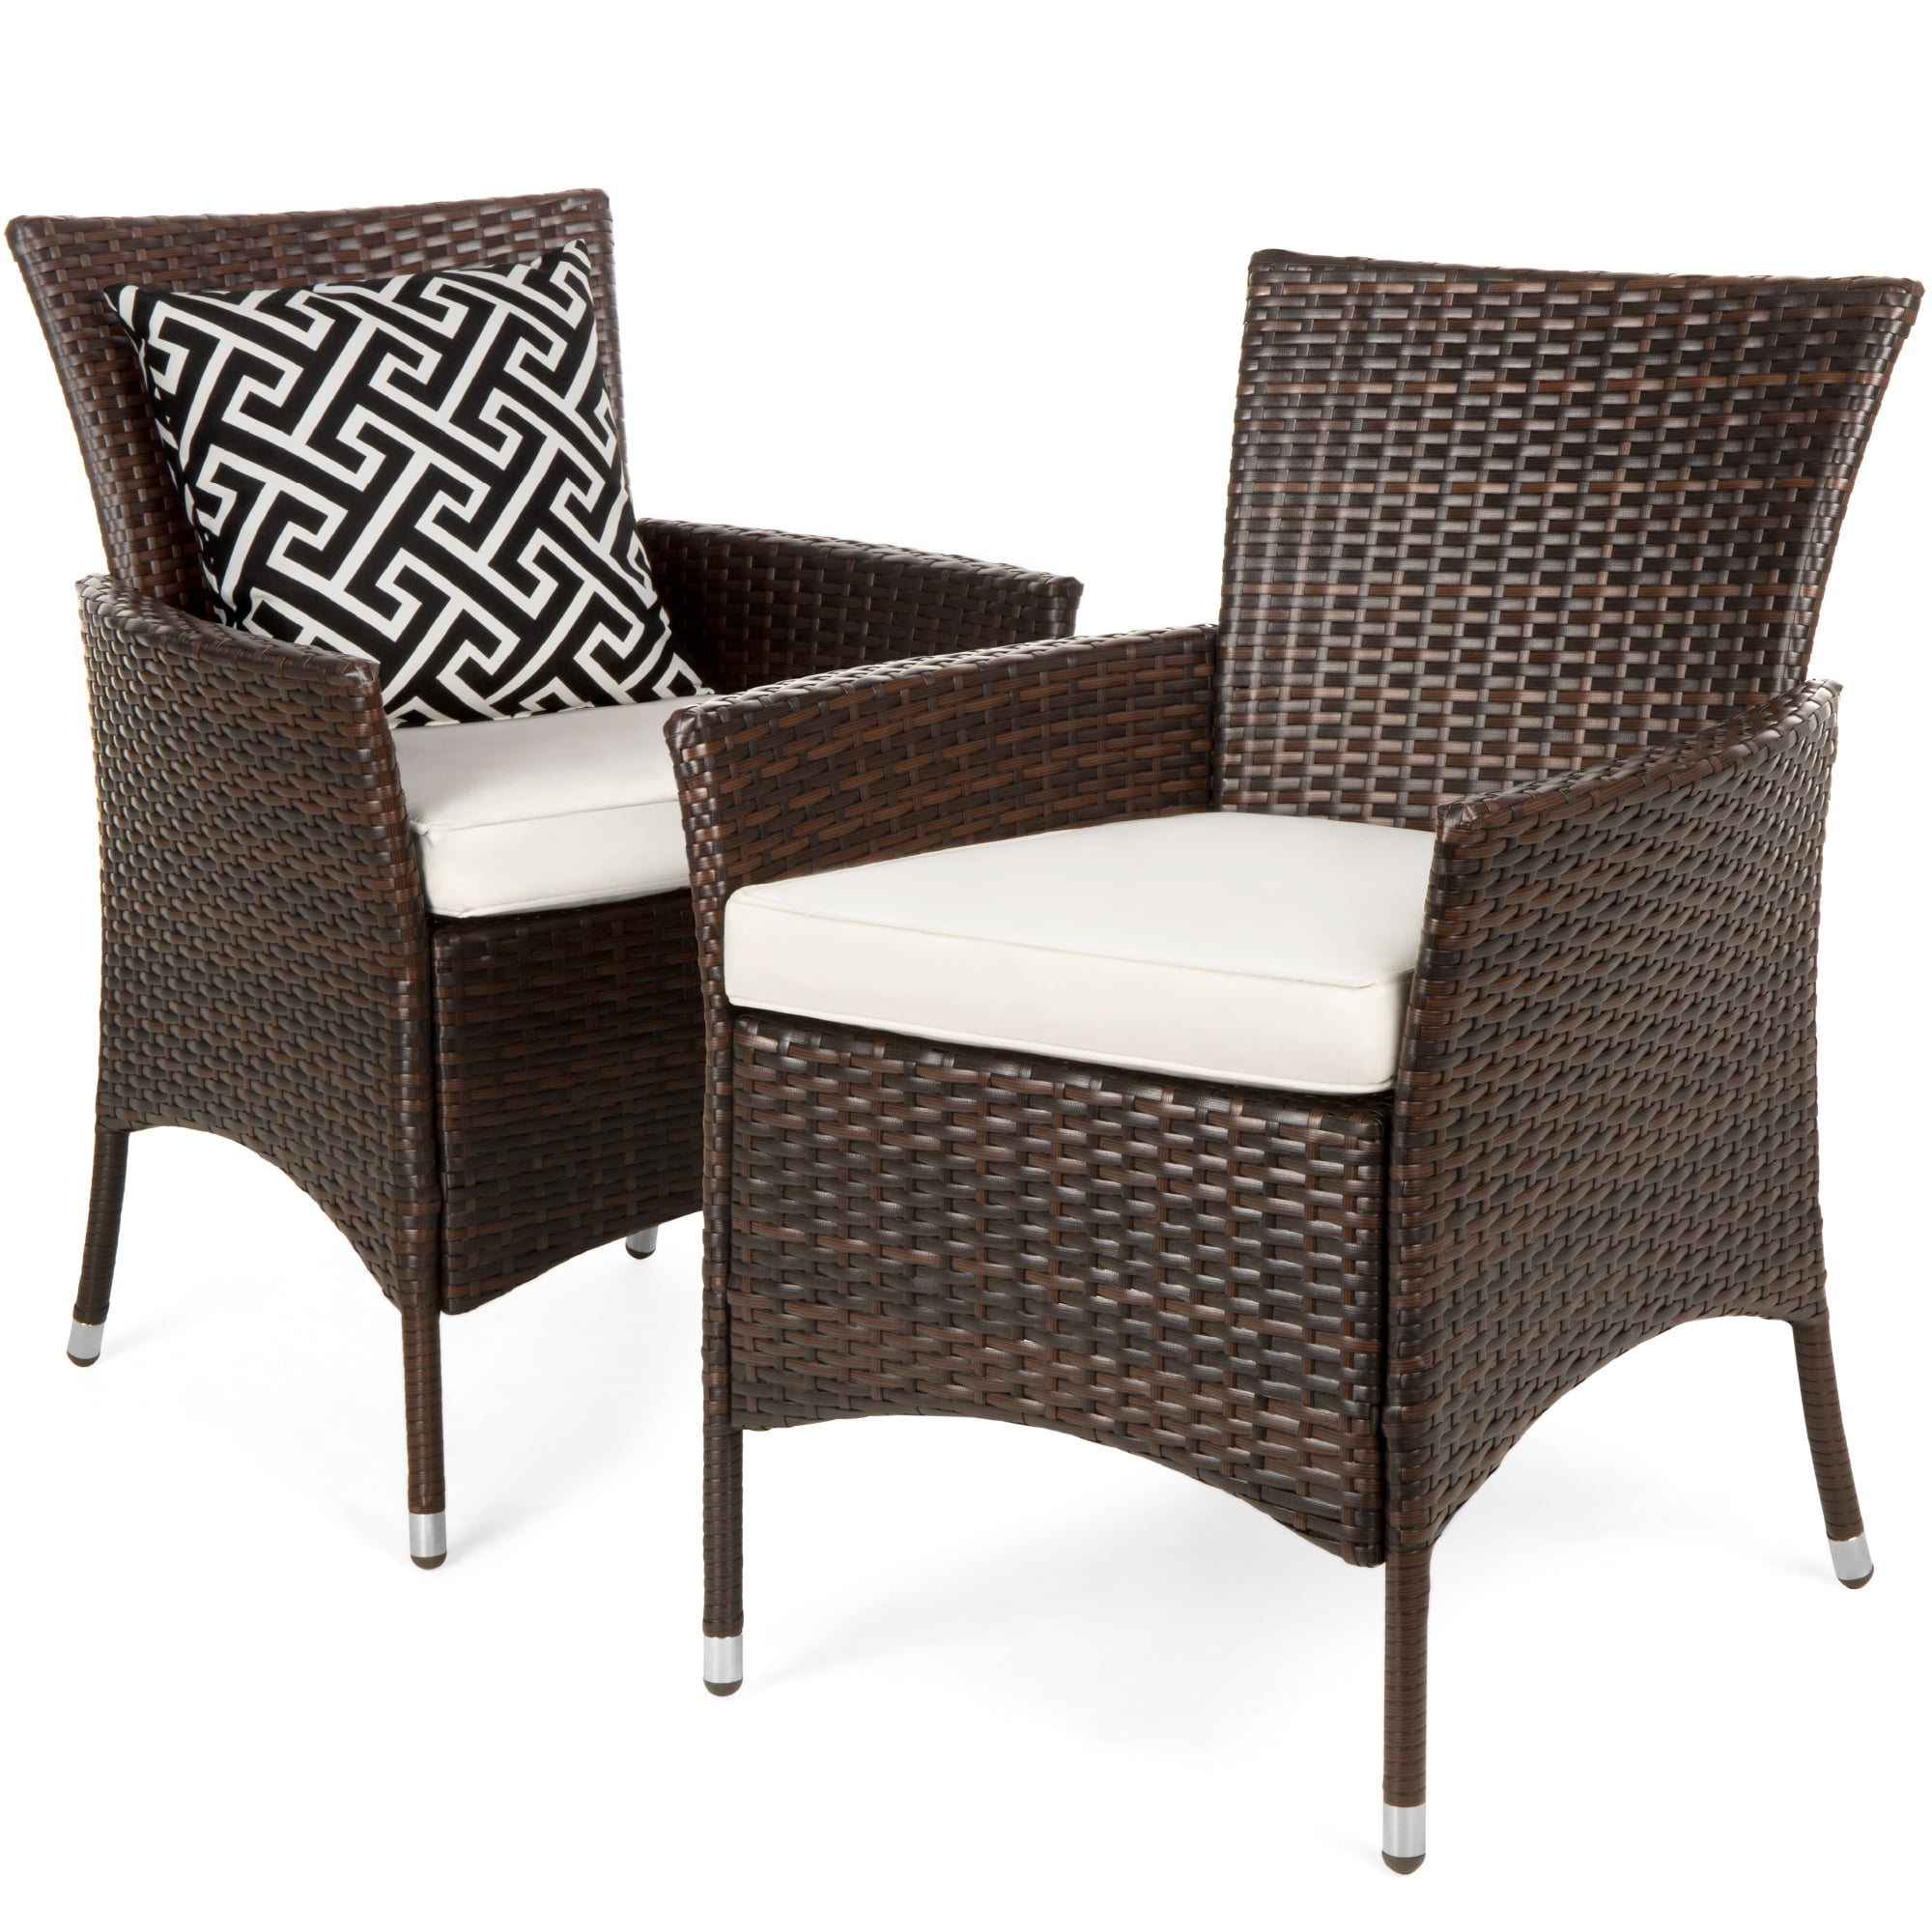 Set of 2 International Caravan Furniture Piece Camelback Resin Wicker Patio Chairs